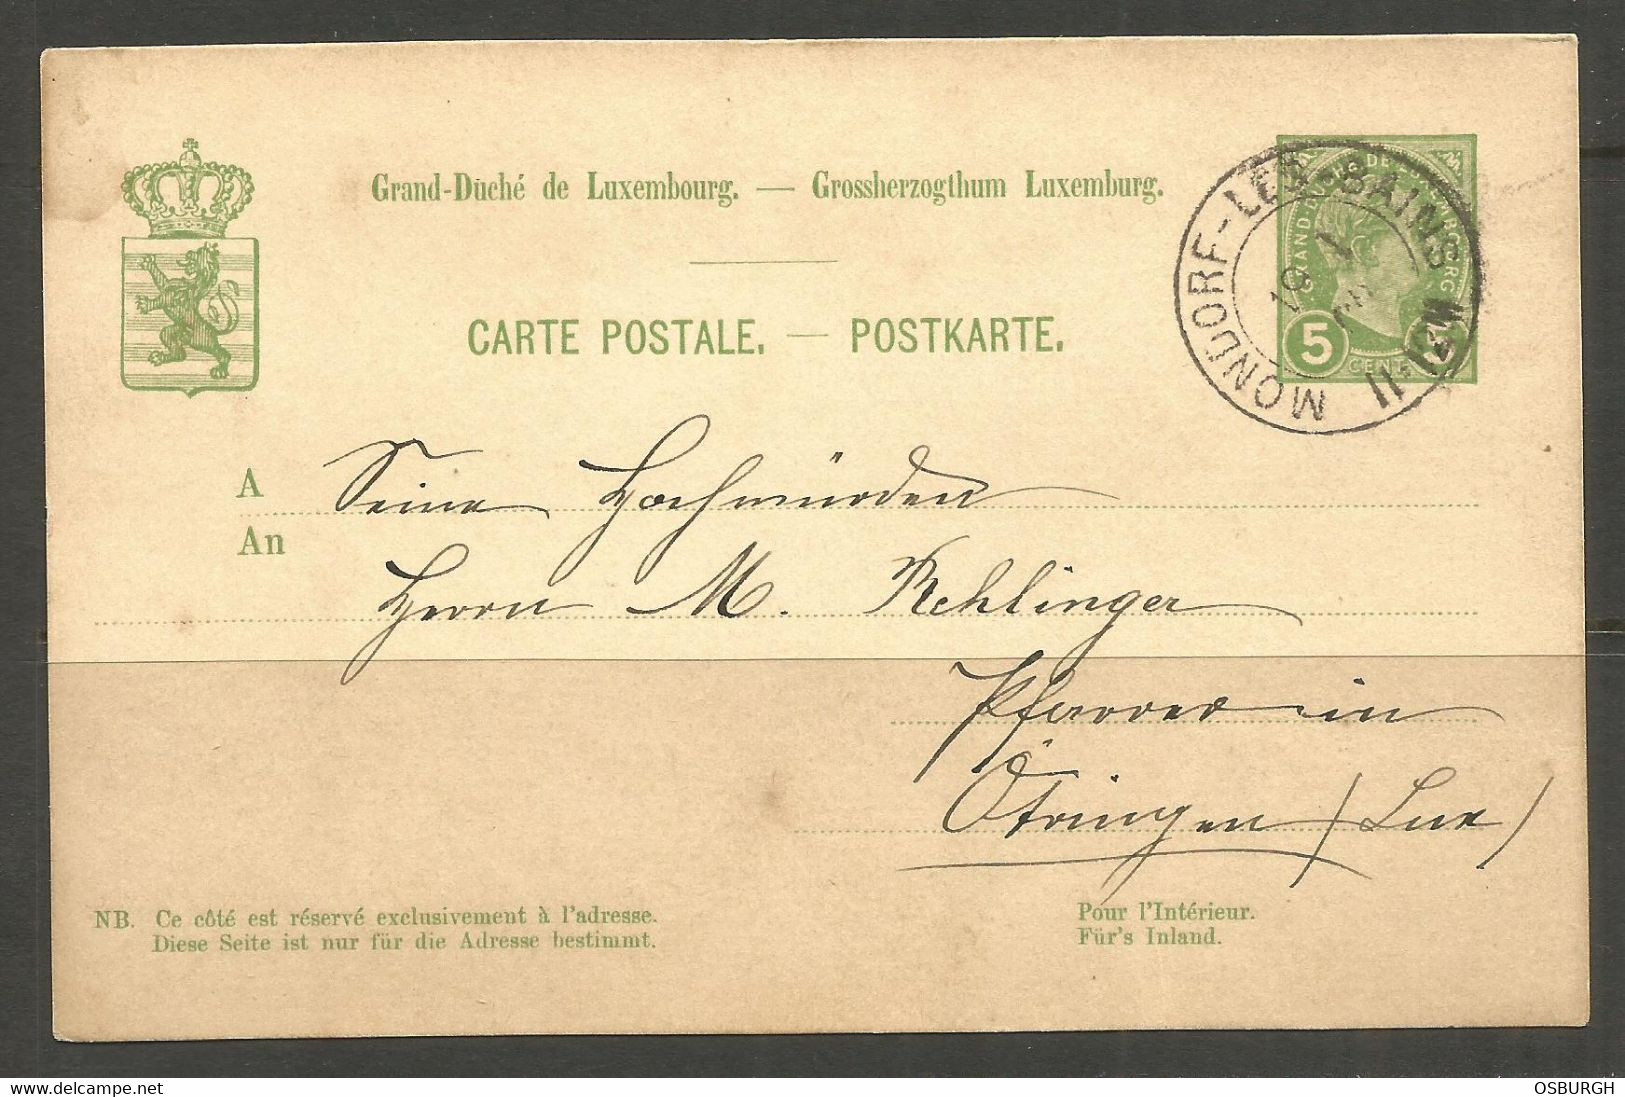 LUXEMBURG. 1901. CARD. MONDORF LES BAINS POSTMARK. - 1895 Adolphe Rechterzijde